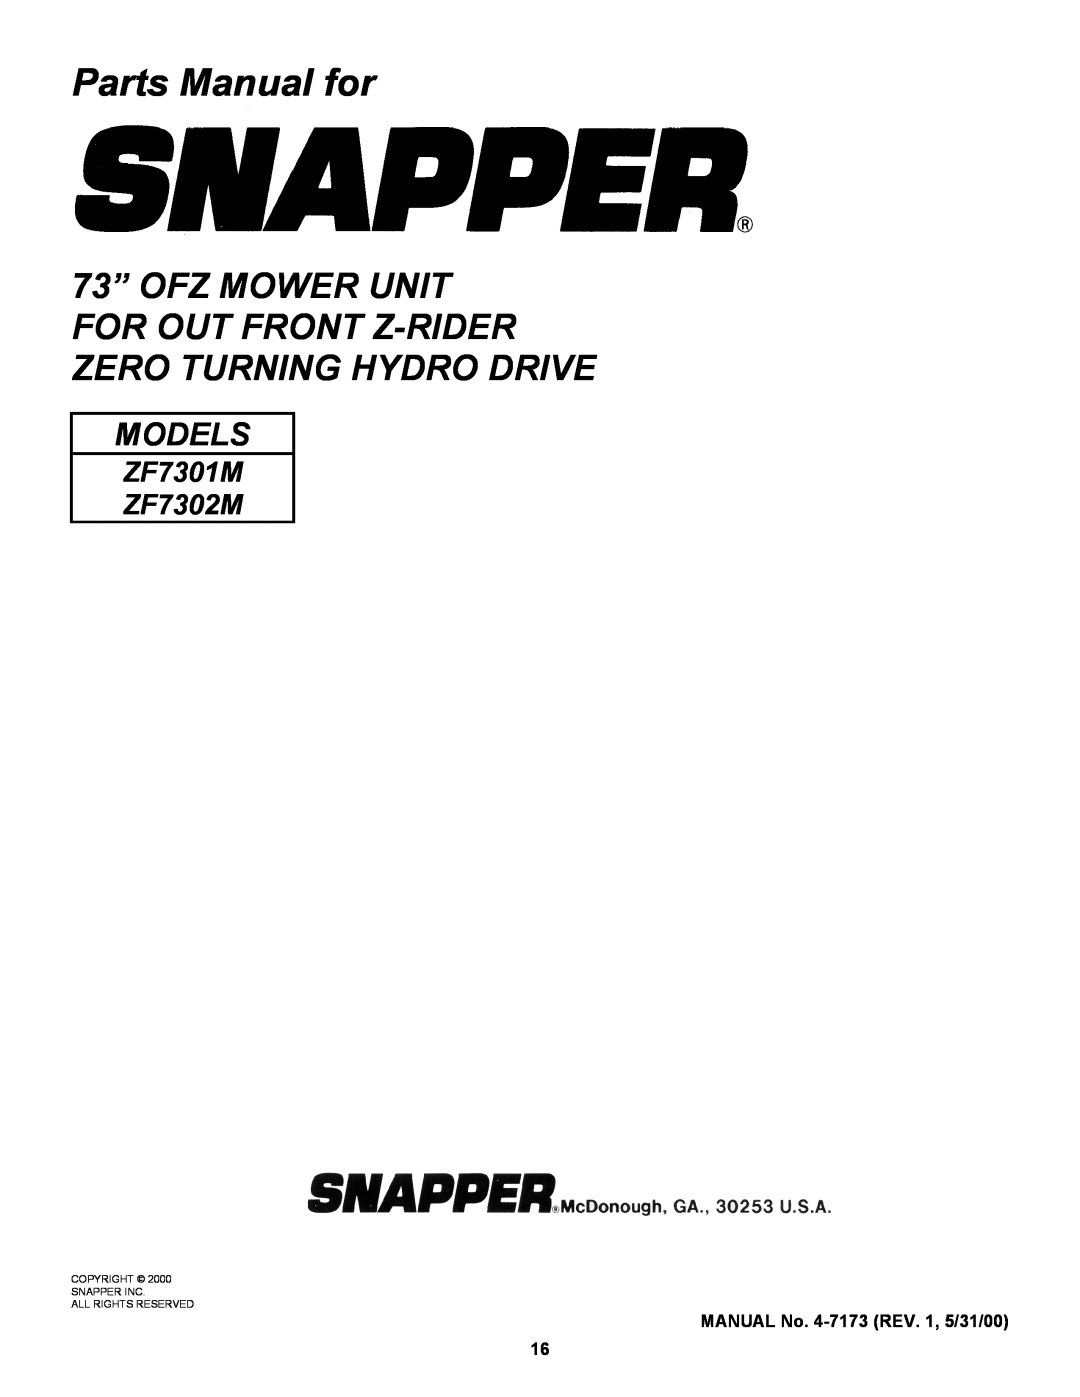 Snapper manual Parts Manual for, Models, ZF7301M ZF7302M, MANUAL No. 4-7173REV. 1, 5/31/00 